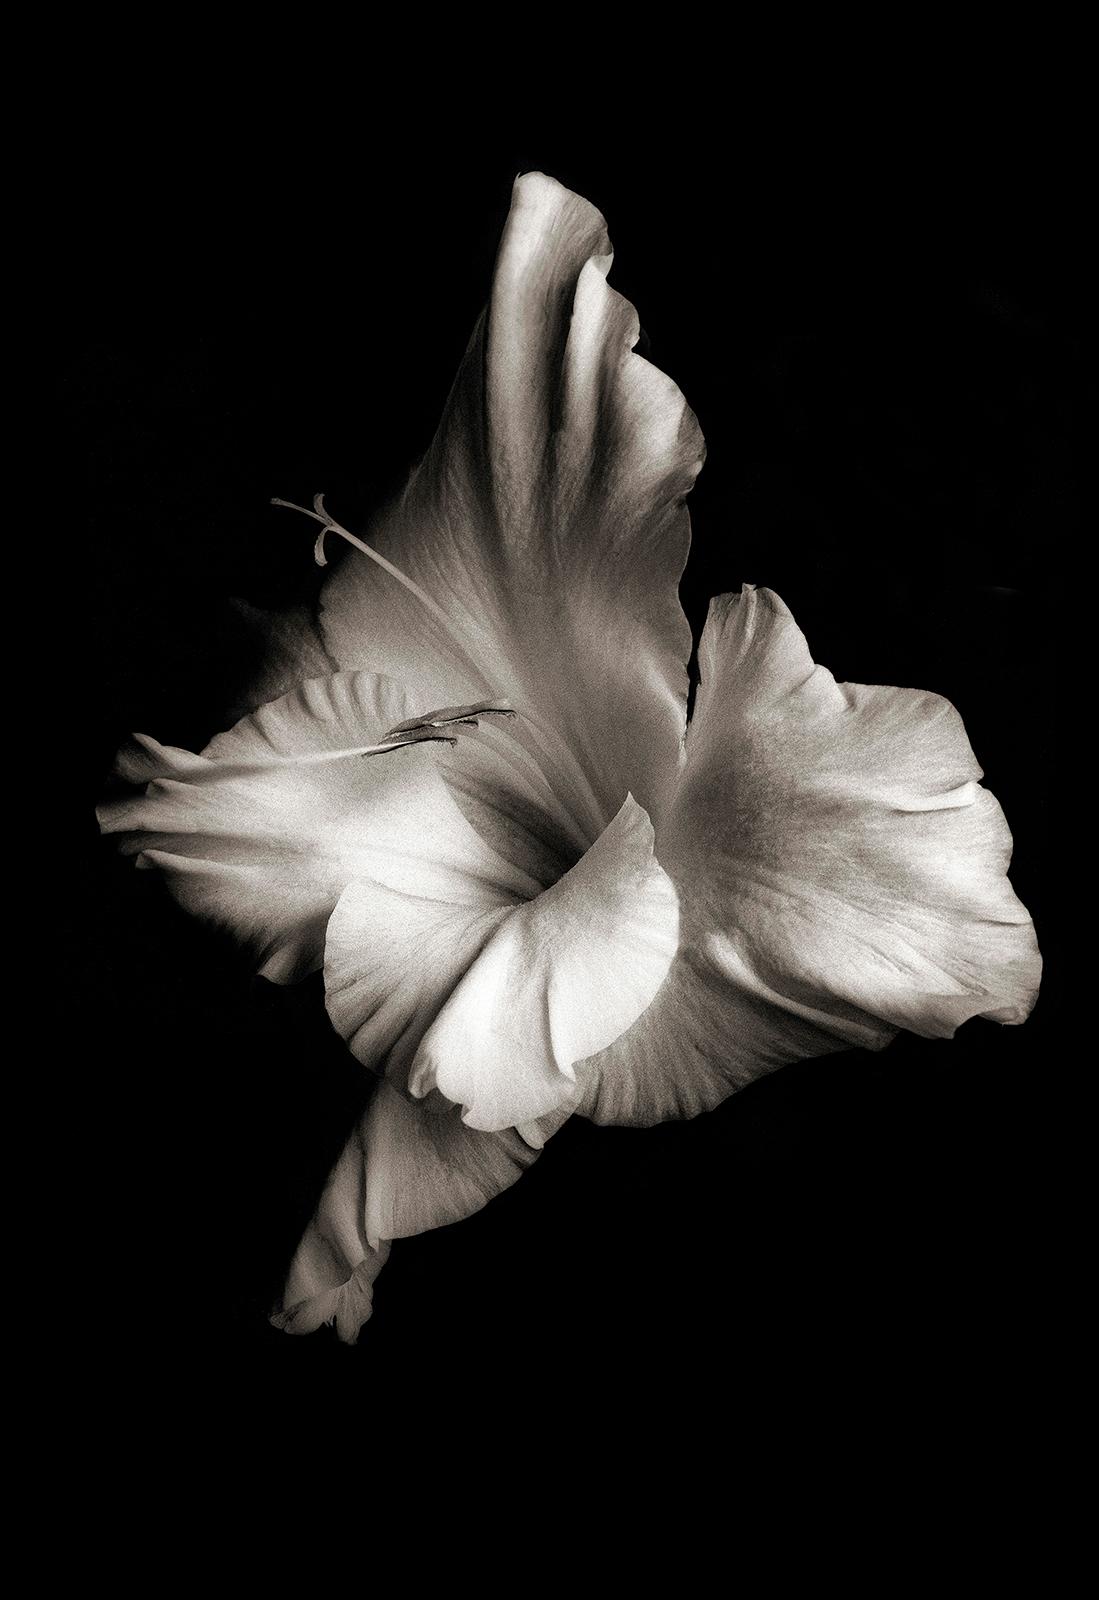 Black and White Photograph Ian Sanderson - Impression florale, Analogue Contemporary, Sepia, Nature Still-life - FlowerHead 